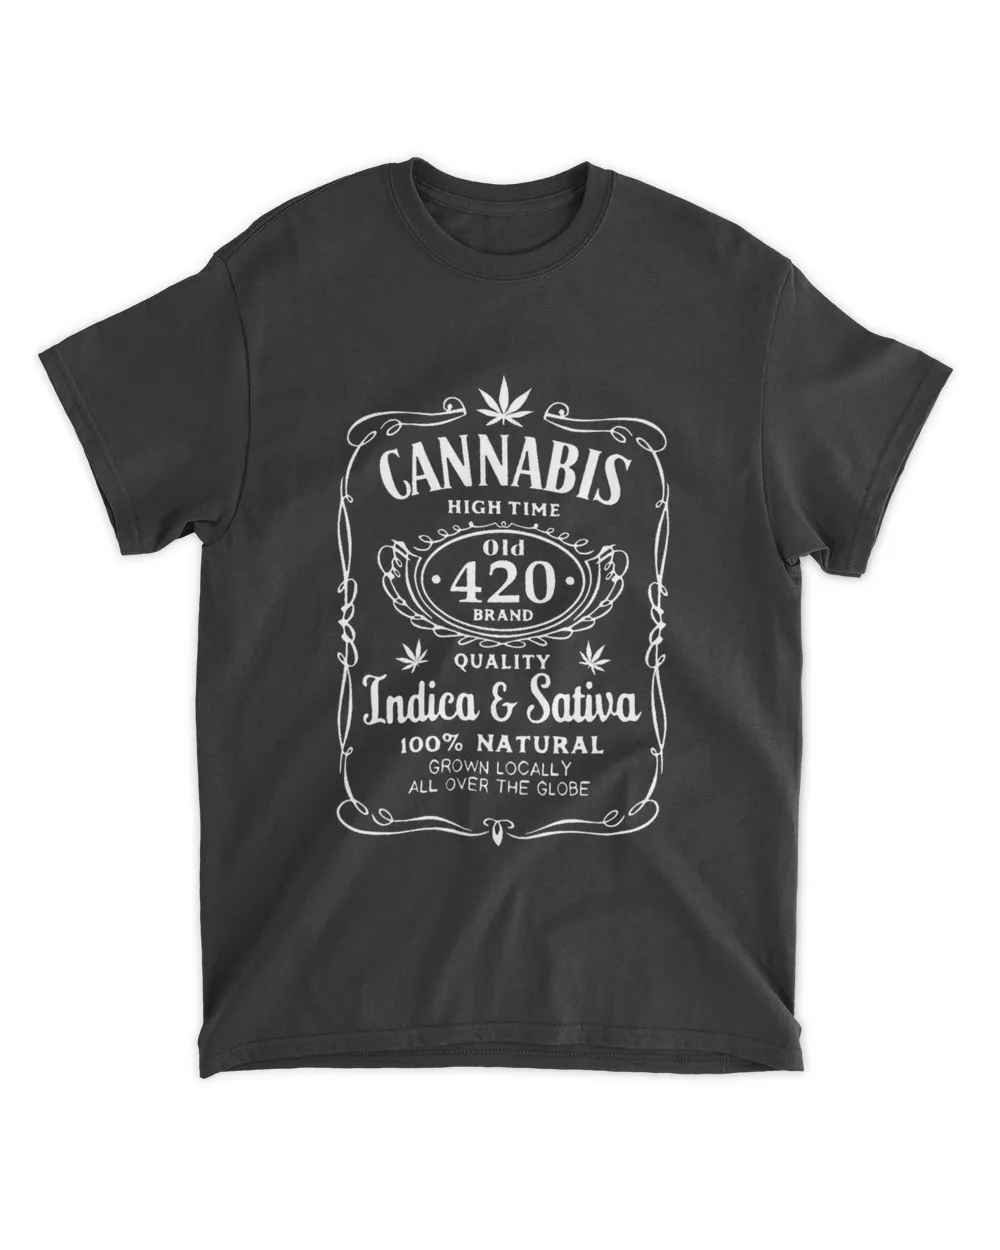 Cannabis High Time Old 420 Brand Shirt